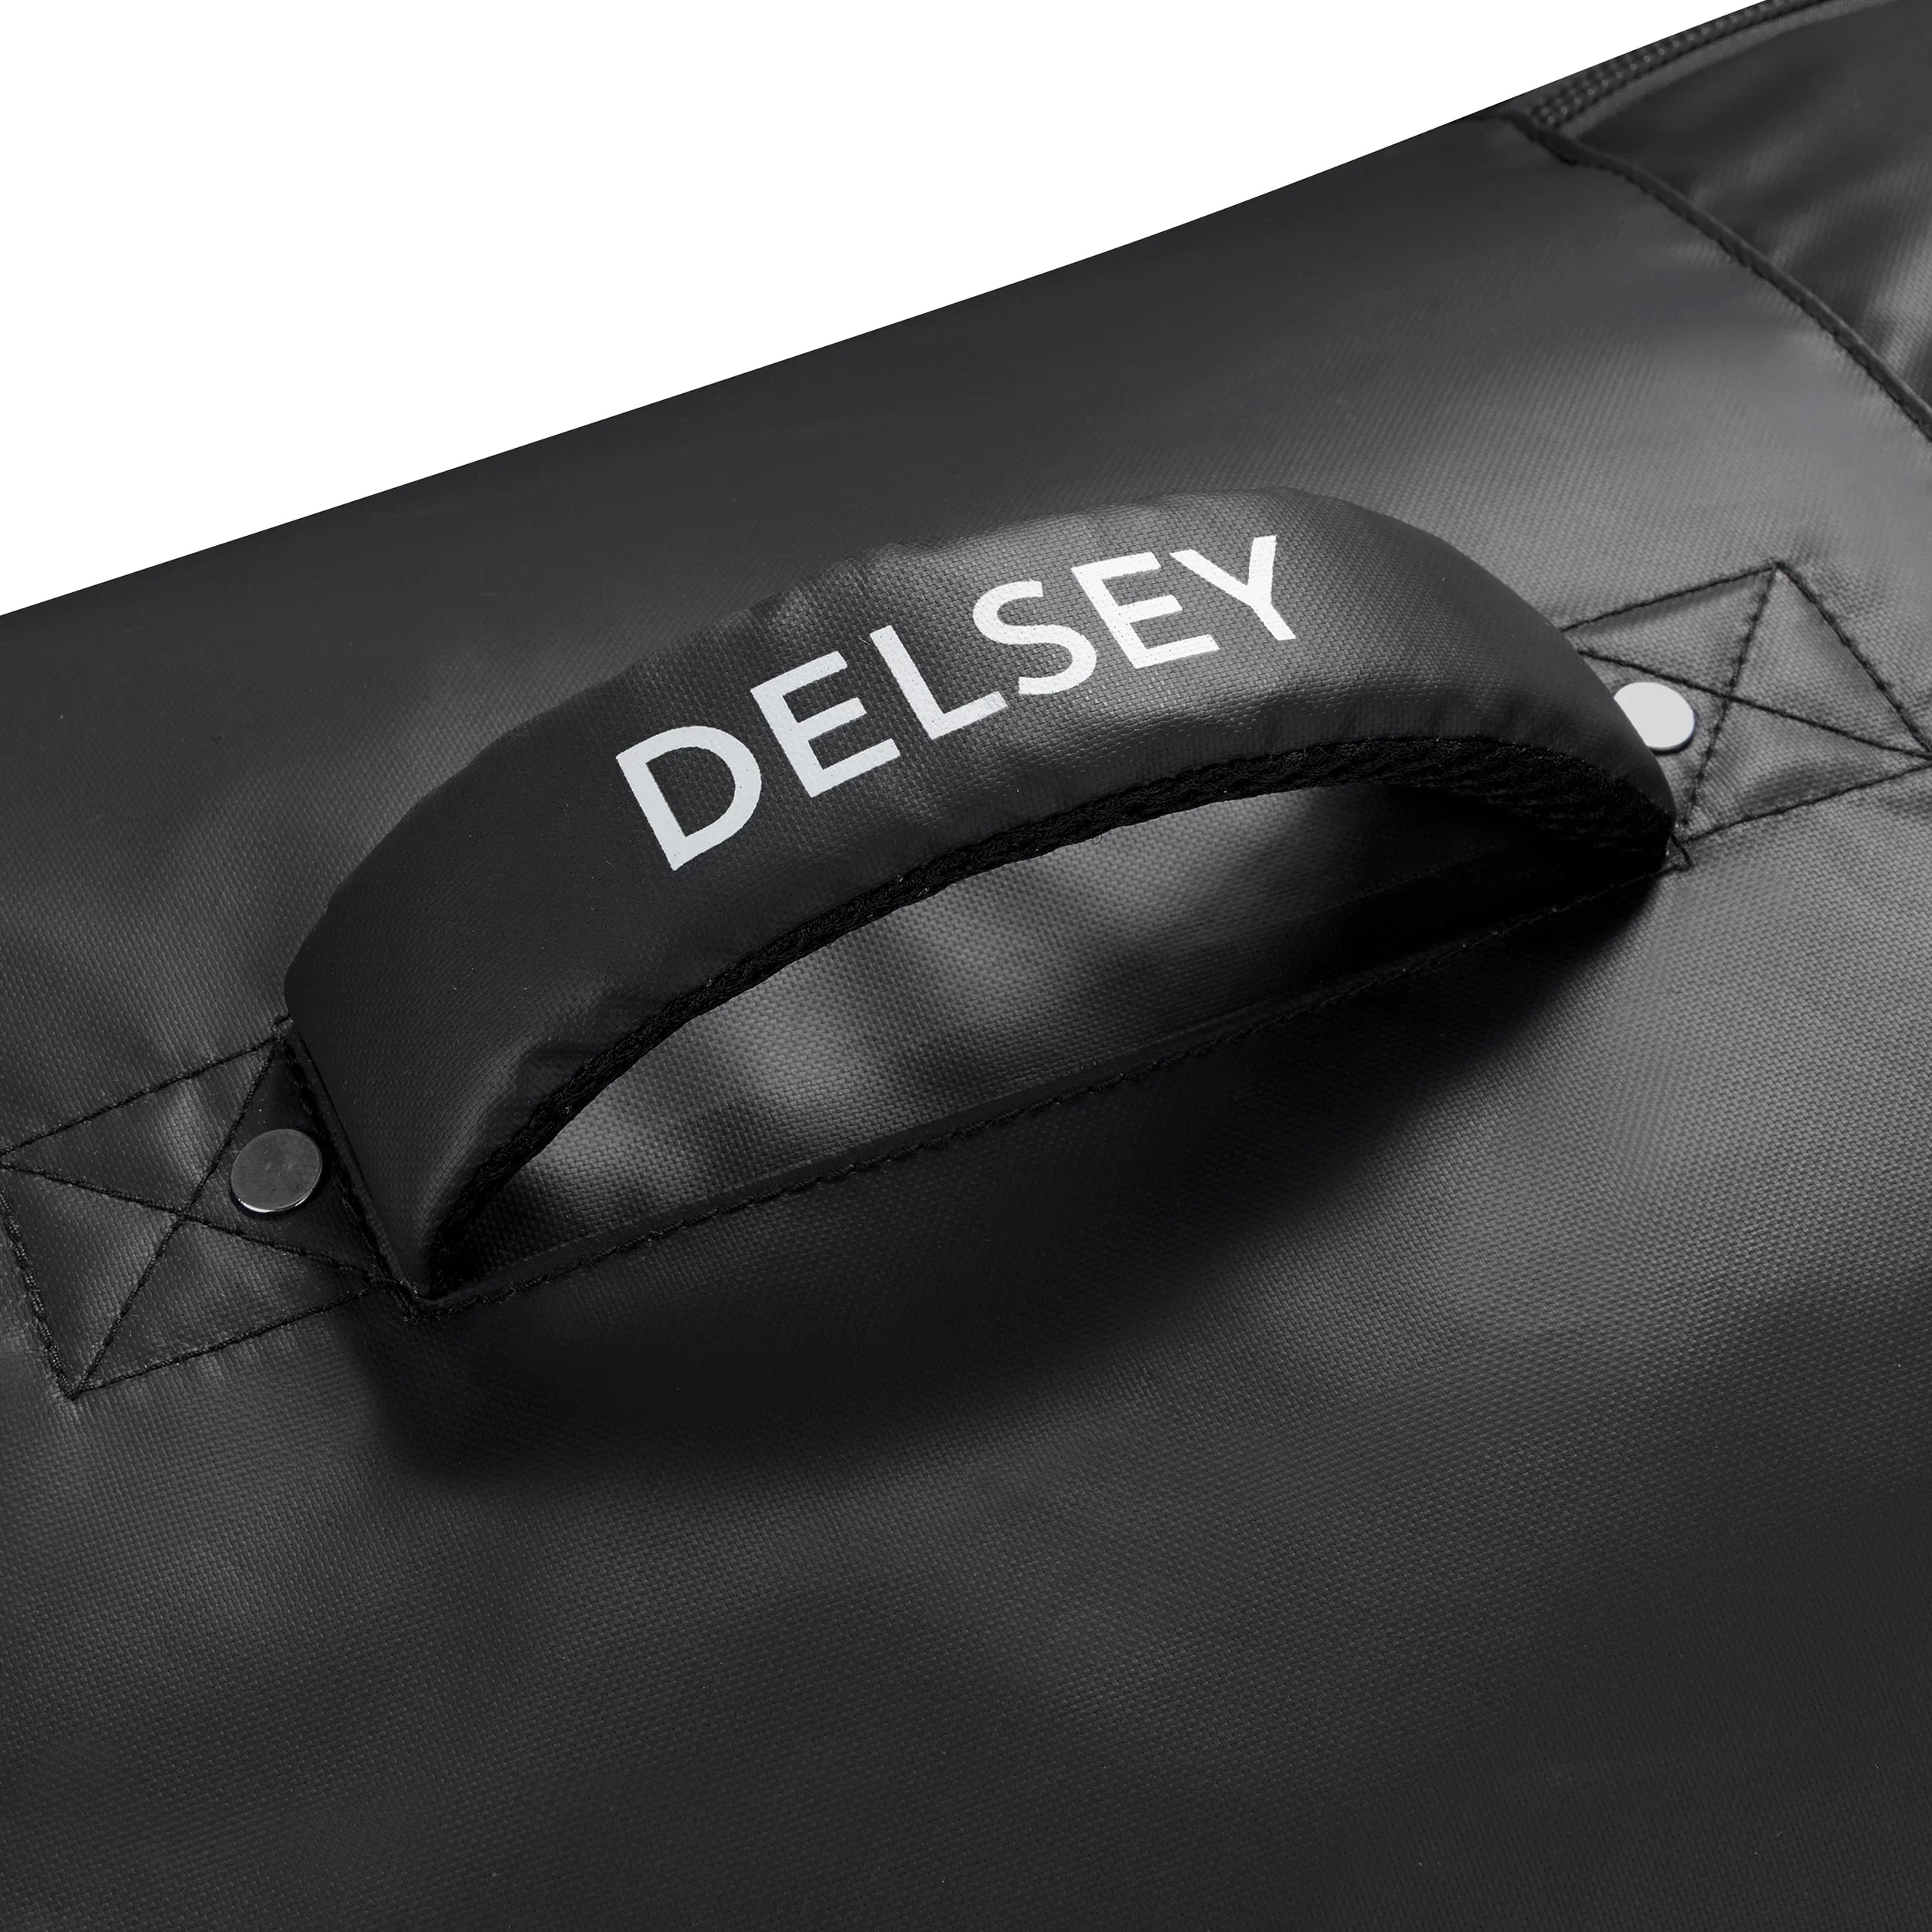 Delsey Raspail 2-wheel trolley travel bag 64 cm - Black